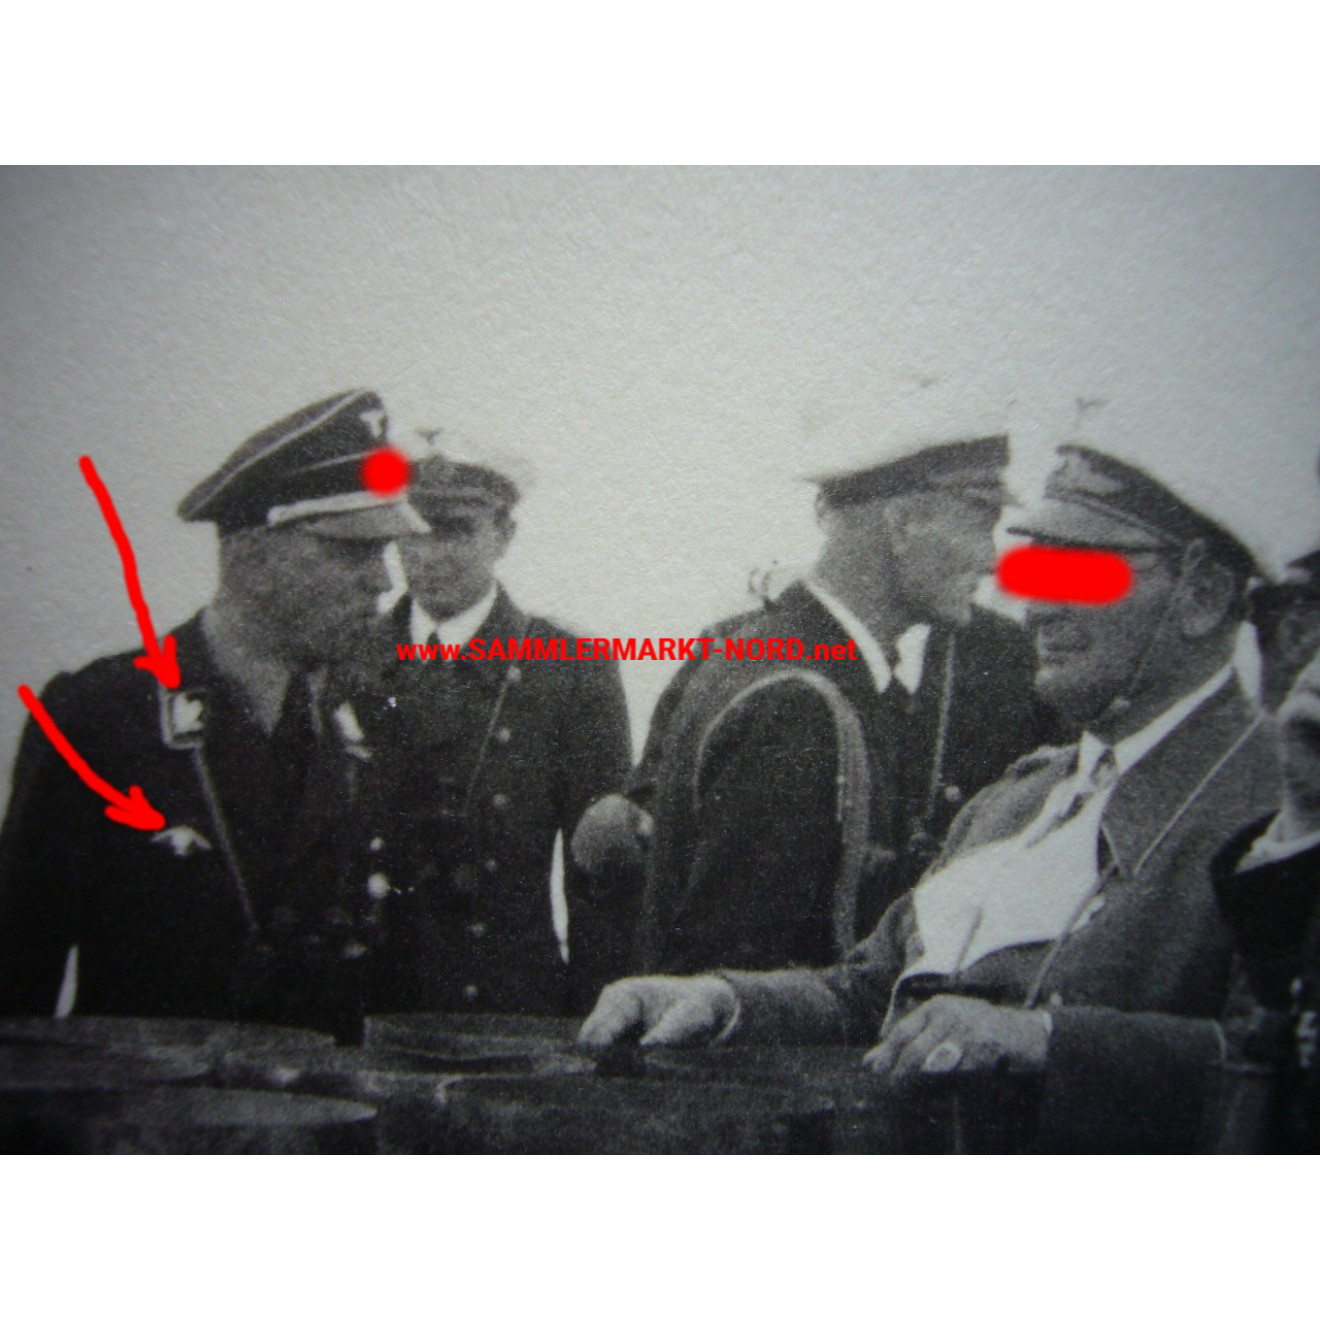 Battleship Germany - SS - Group leader with NSDAP blood order & Hermann Göring